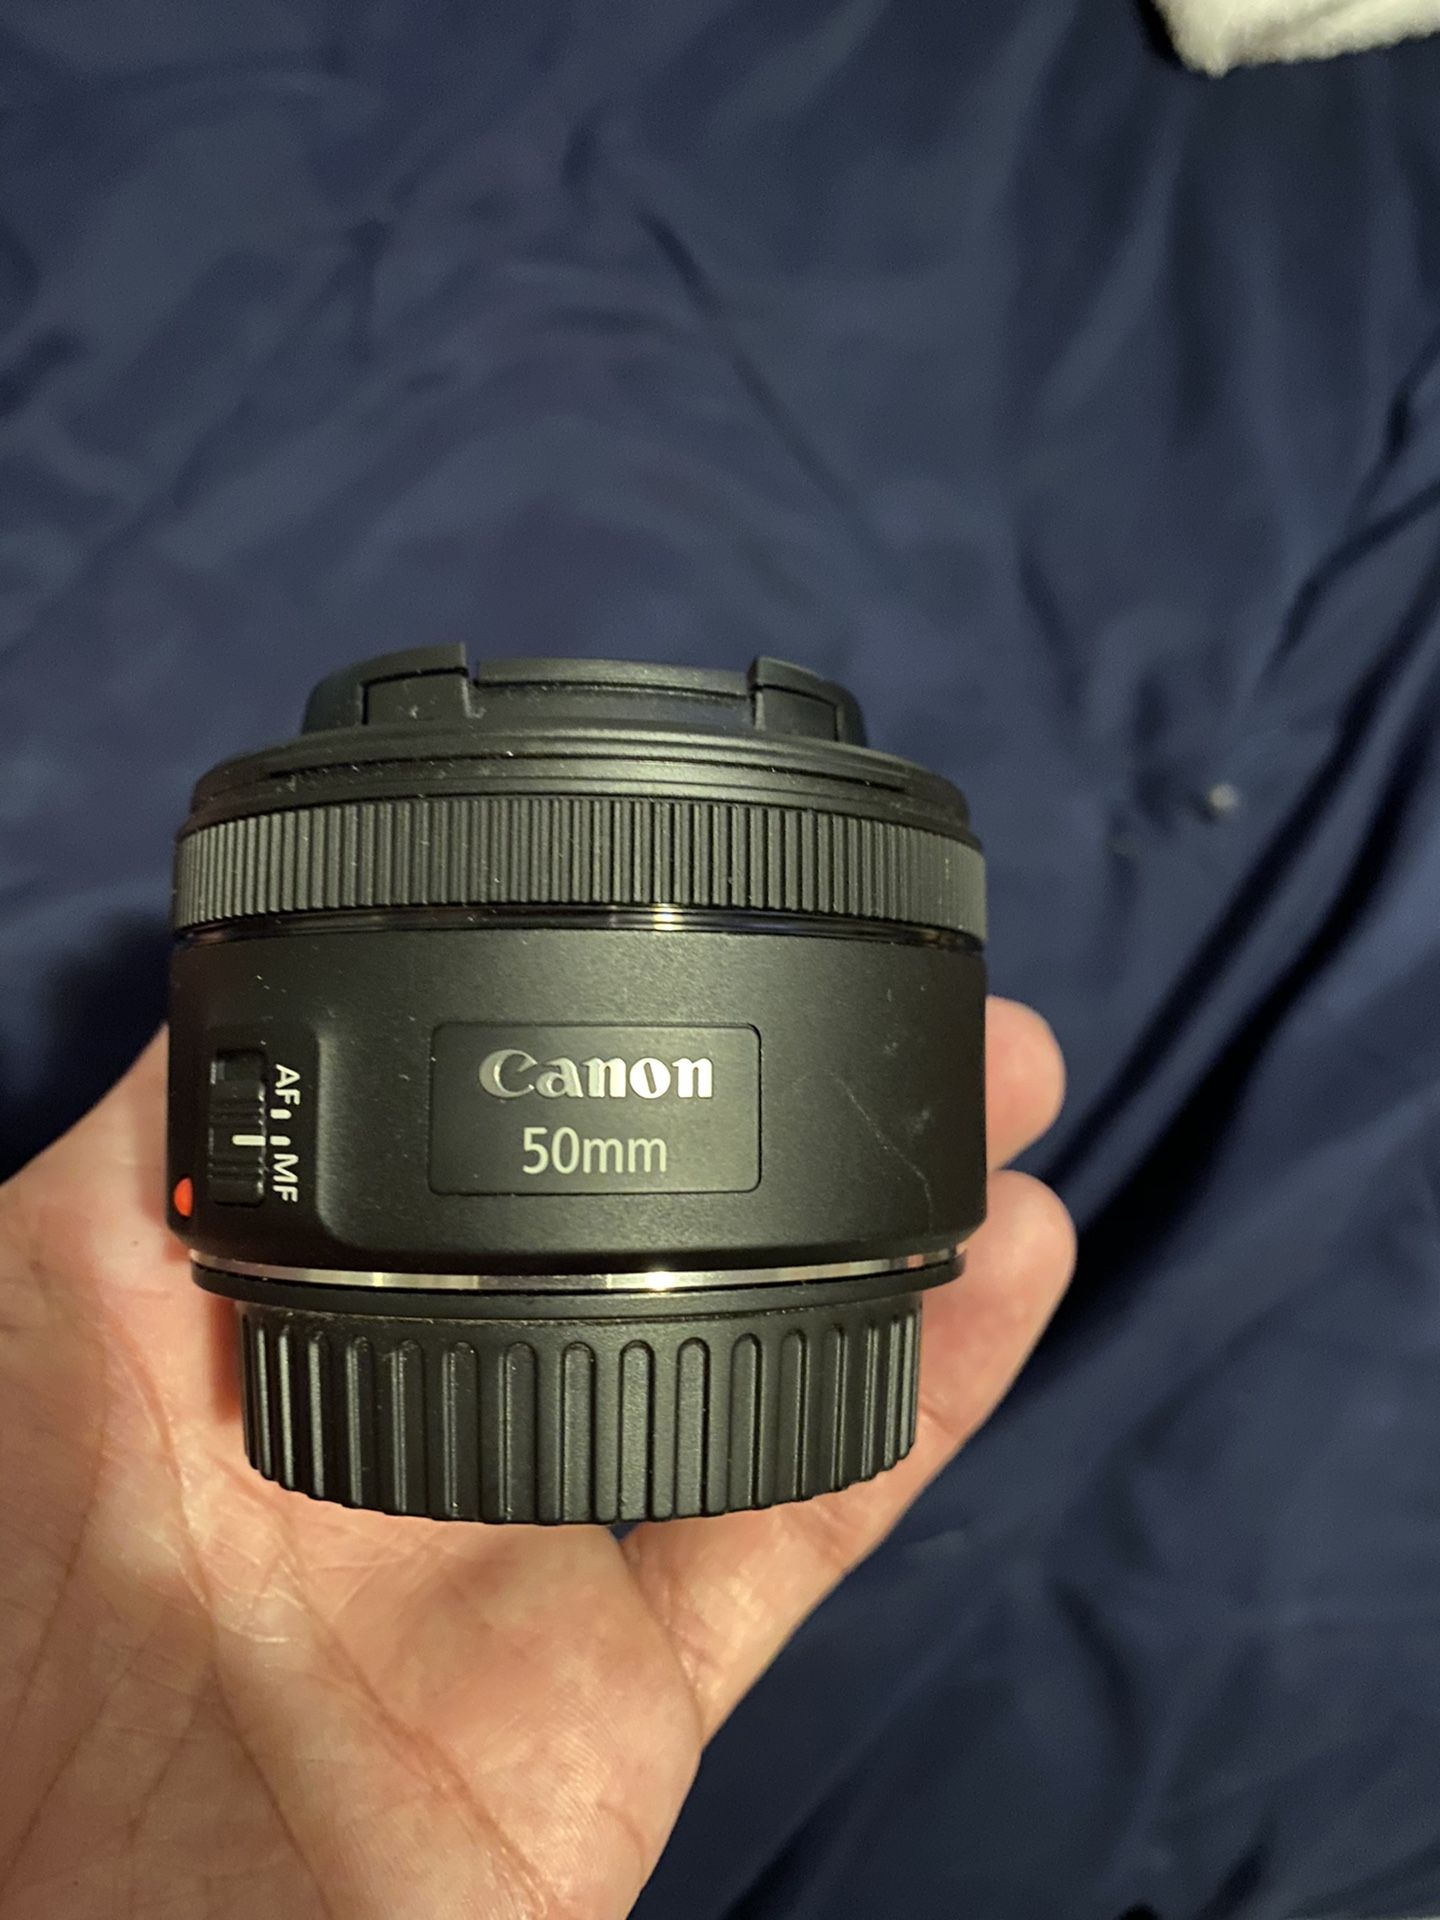 50mm Canon camera lens